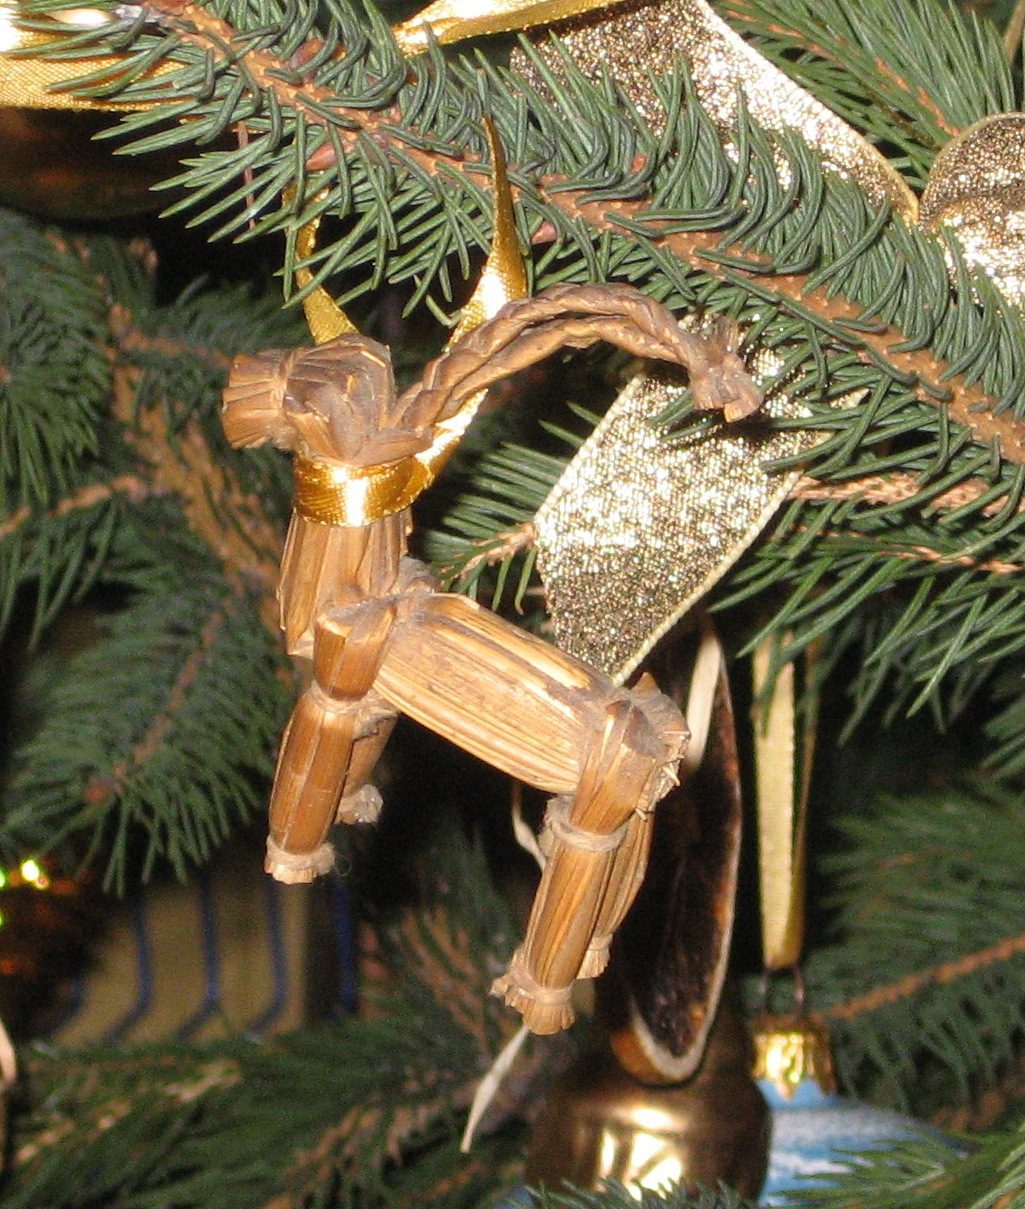 Yule Goat on a Christmas tree. (Credit: Wikimedia)